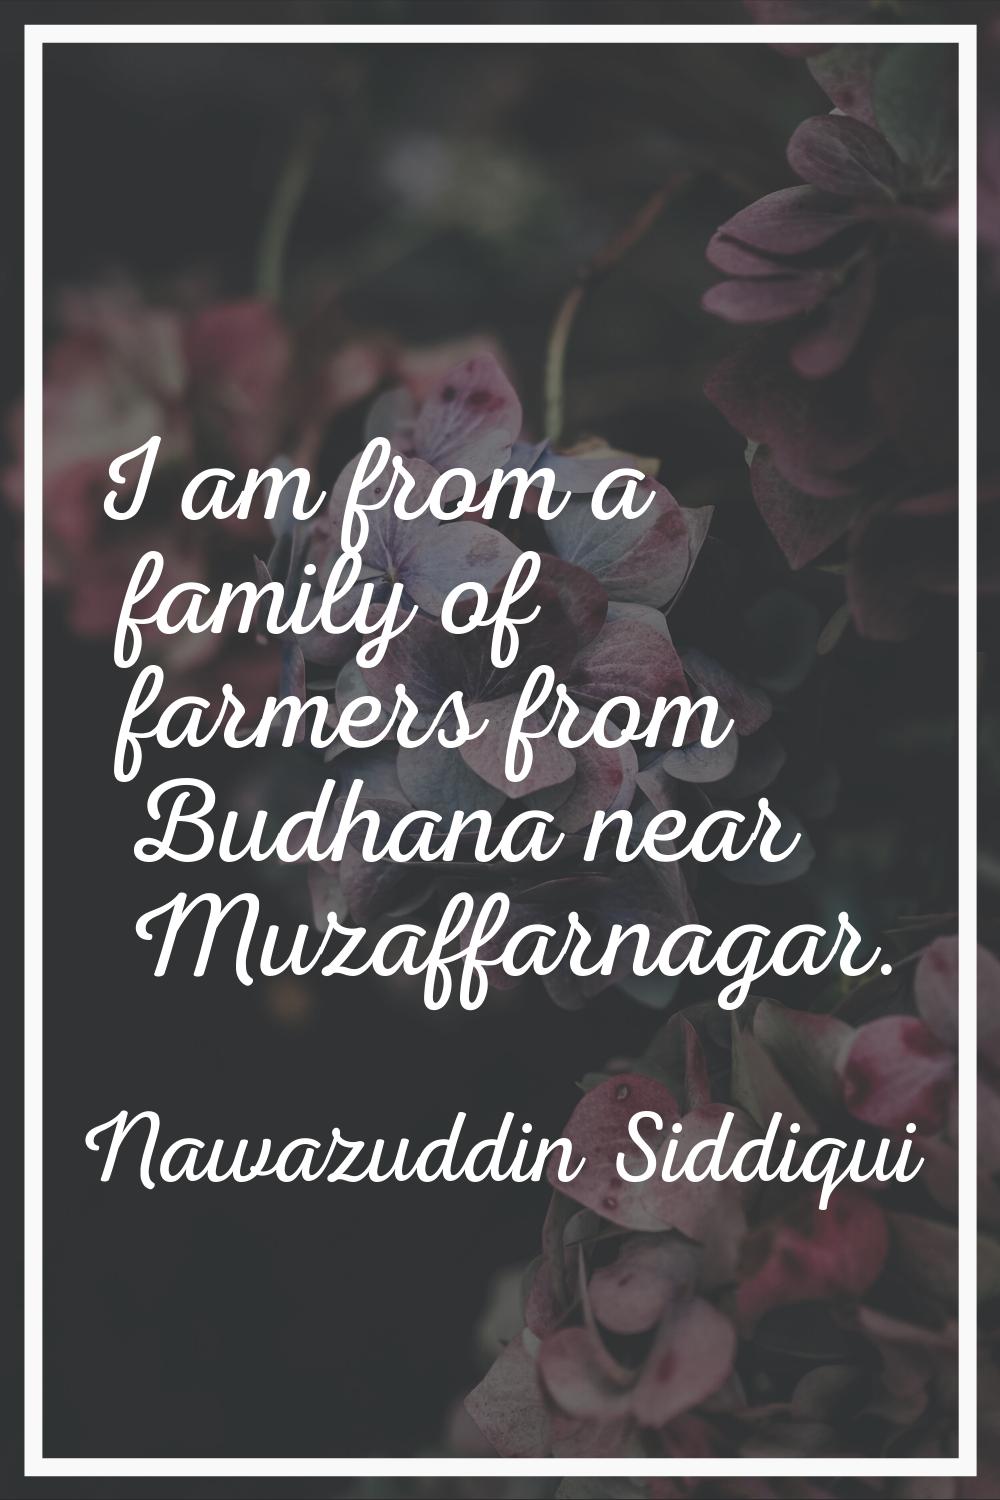 I am from a family of farmers from Budhana near Muzaffarnagar.